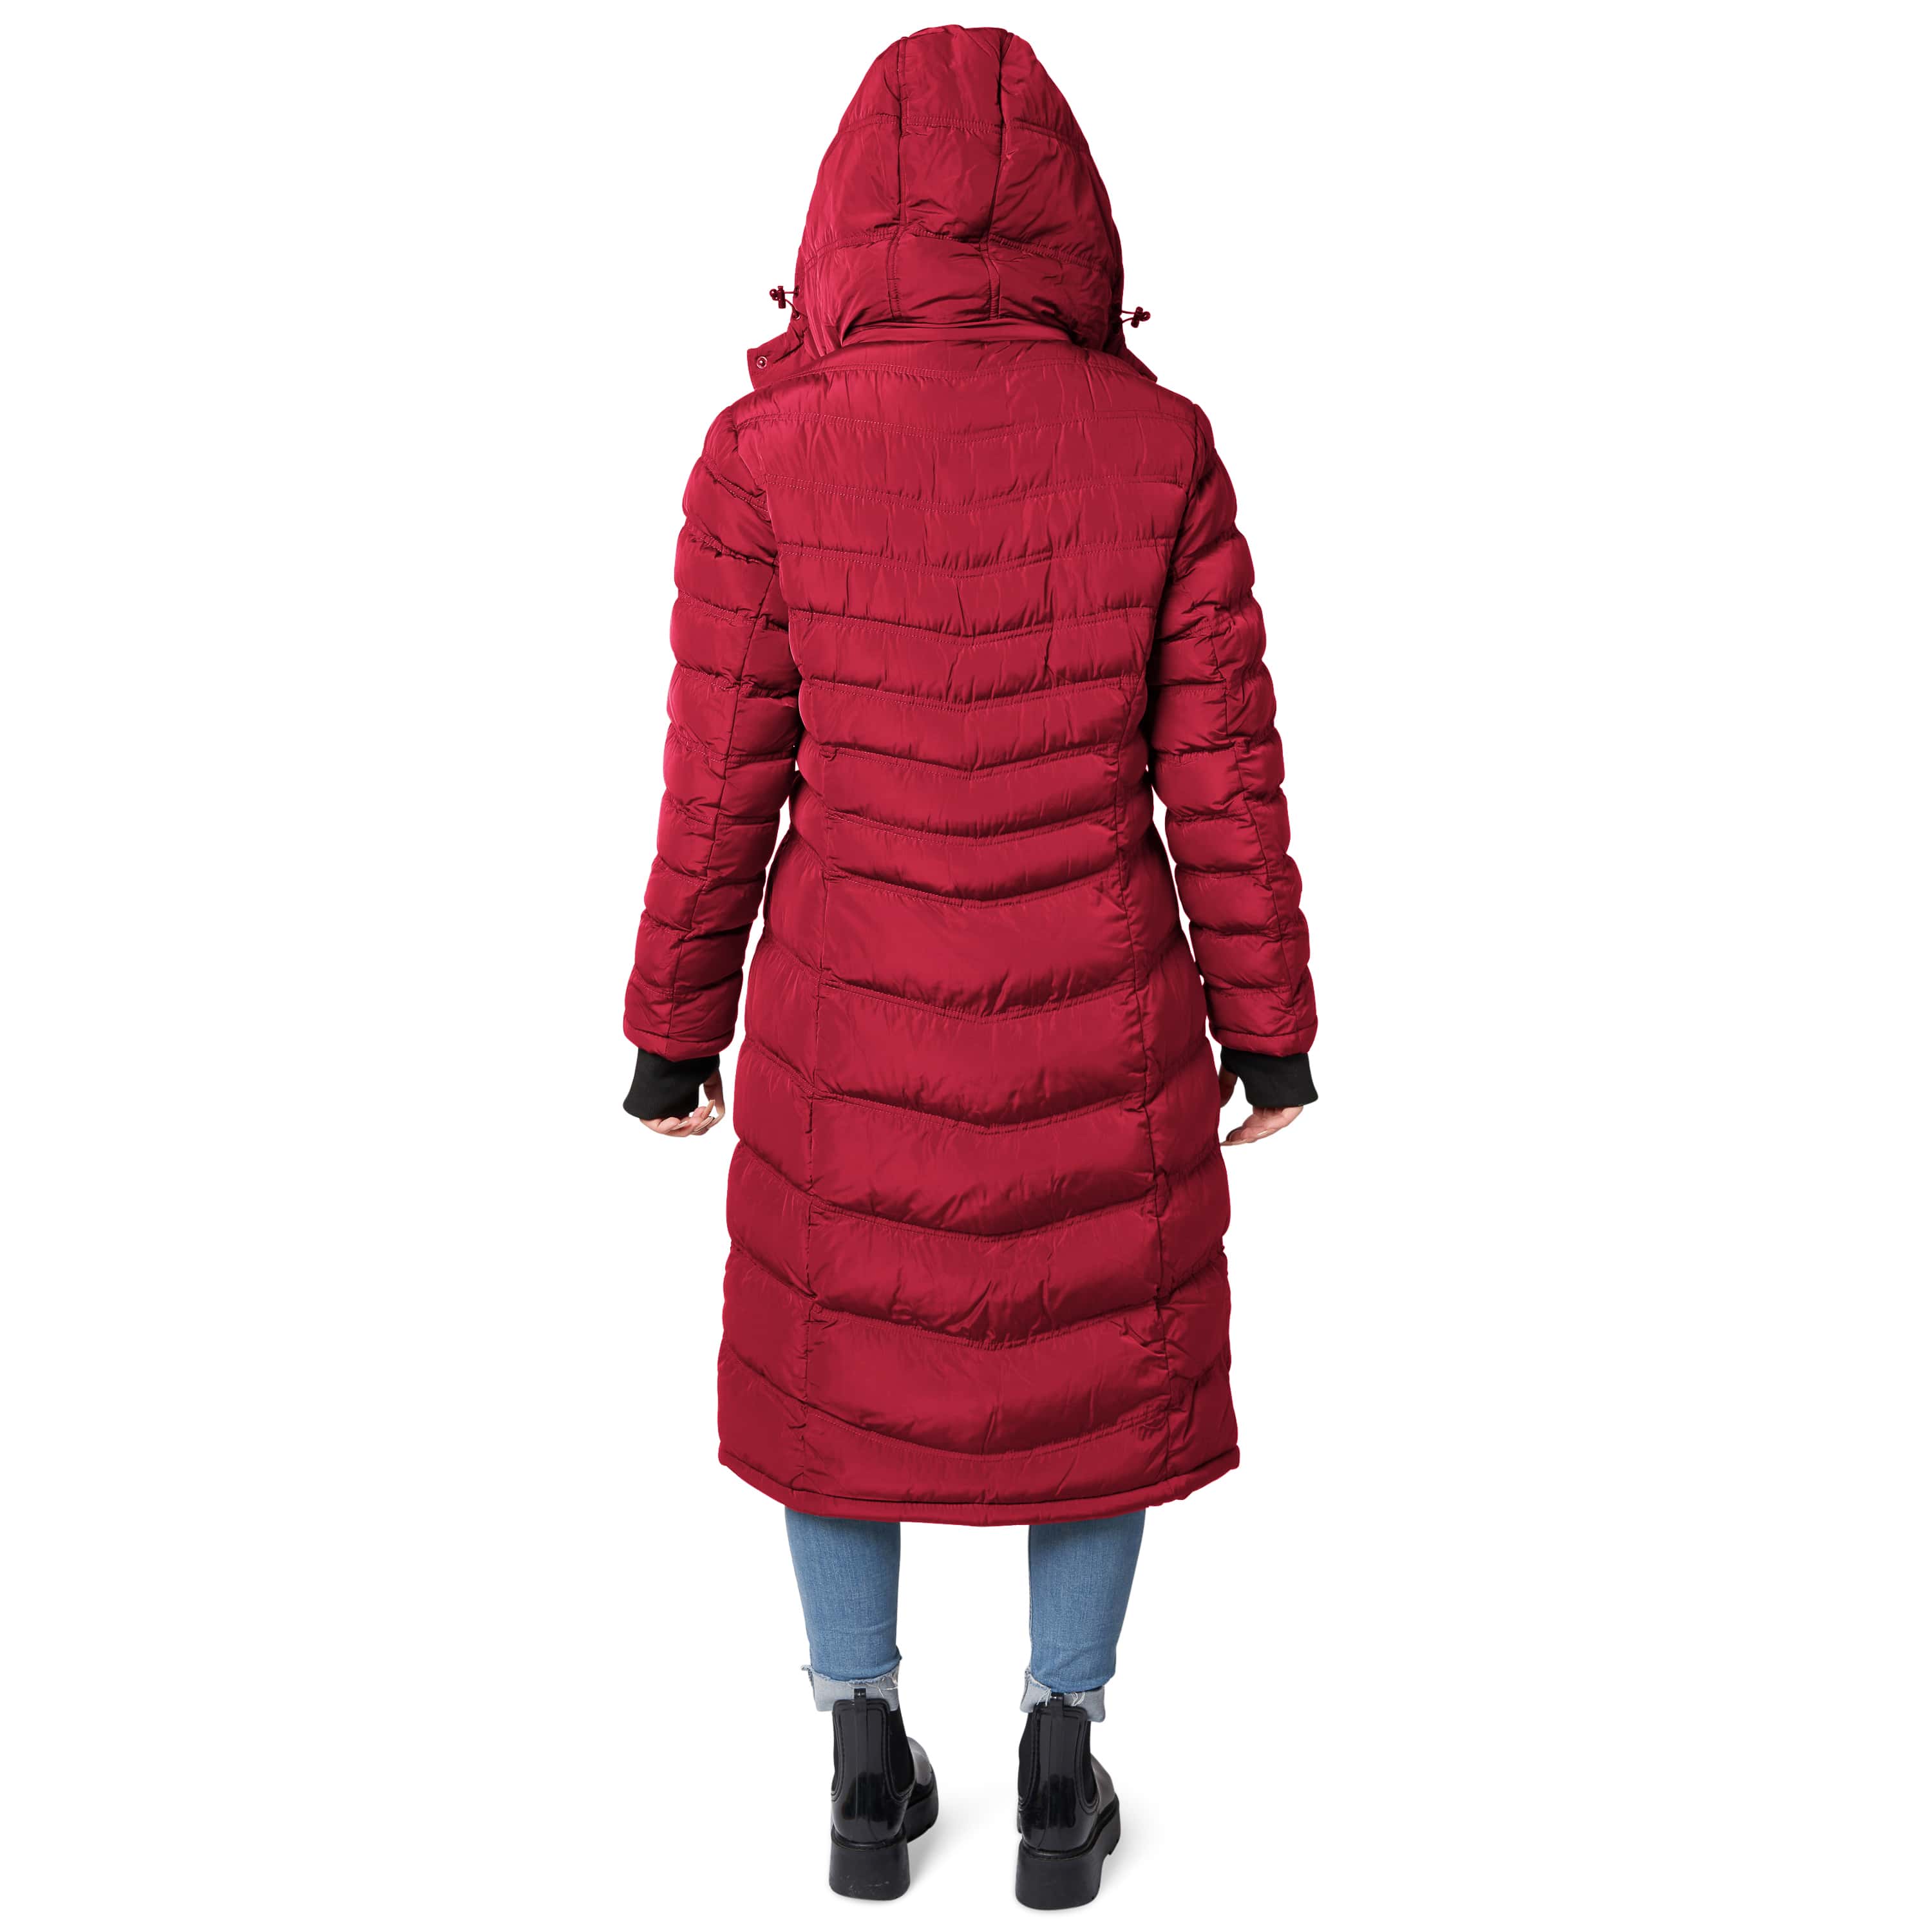 Women's Maxi Coat - Water-Resistant, Polar Fleece Lined, and 